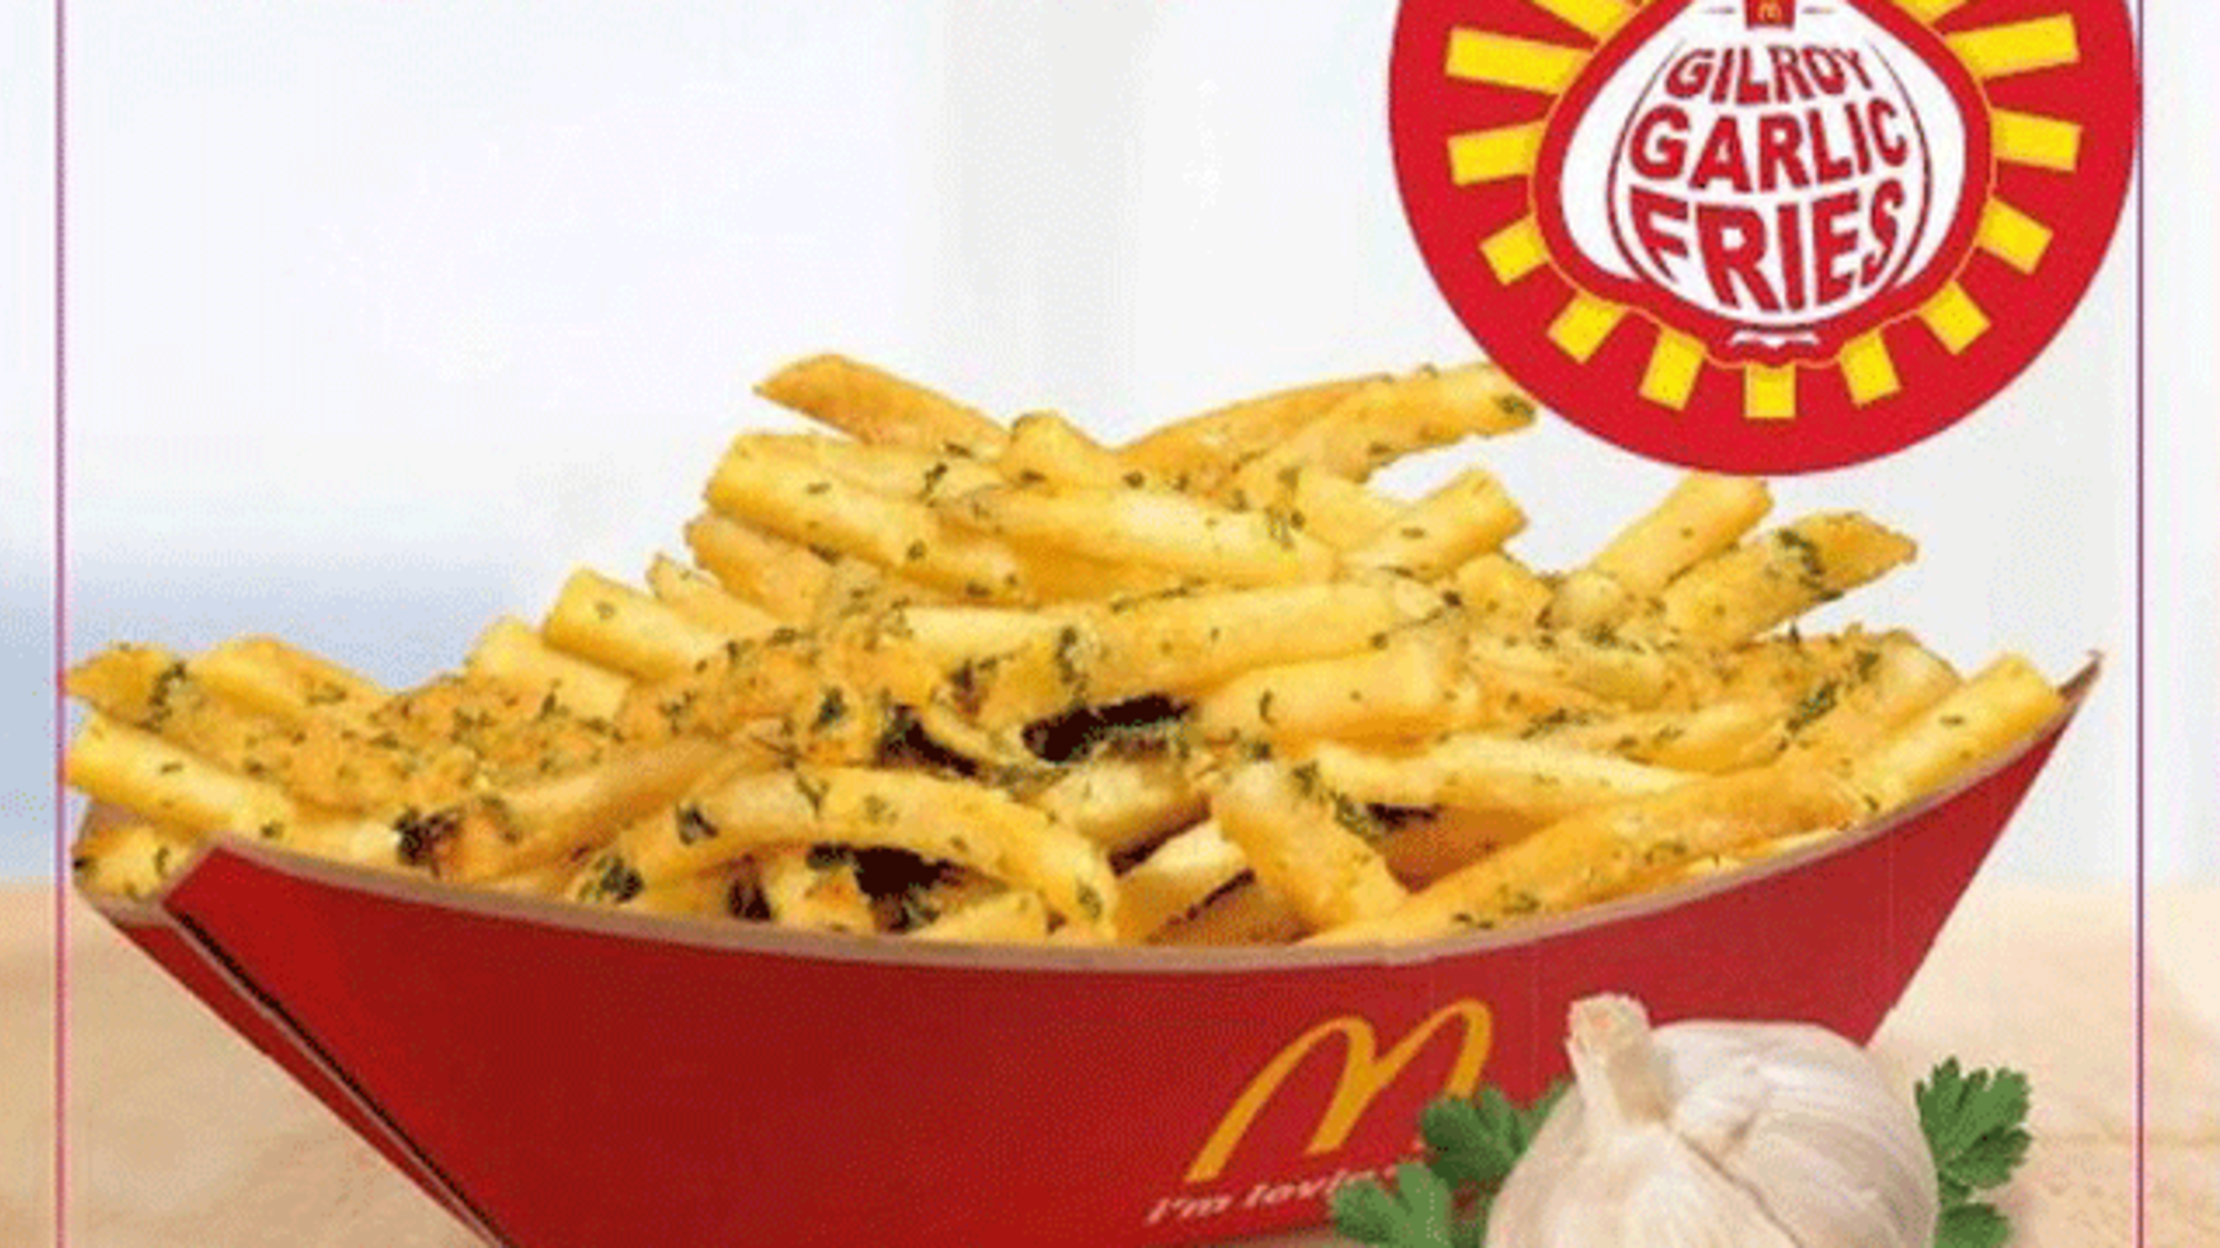 Mcdonald S New Garlic Fries Are Already A Success Mental Floss Free